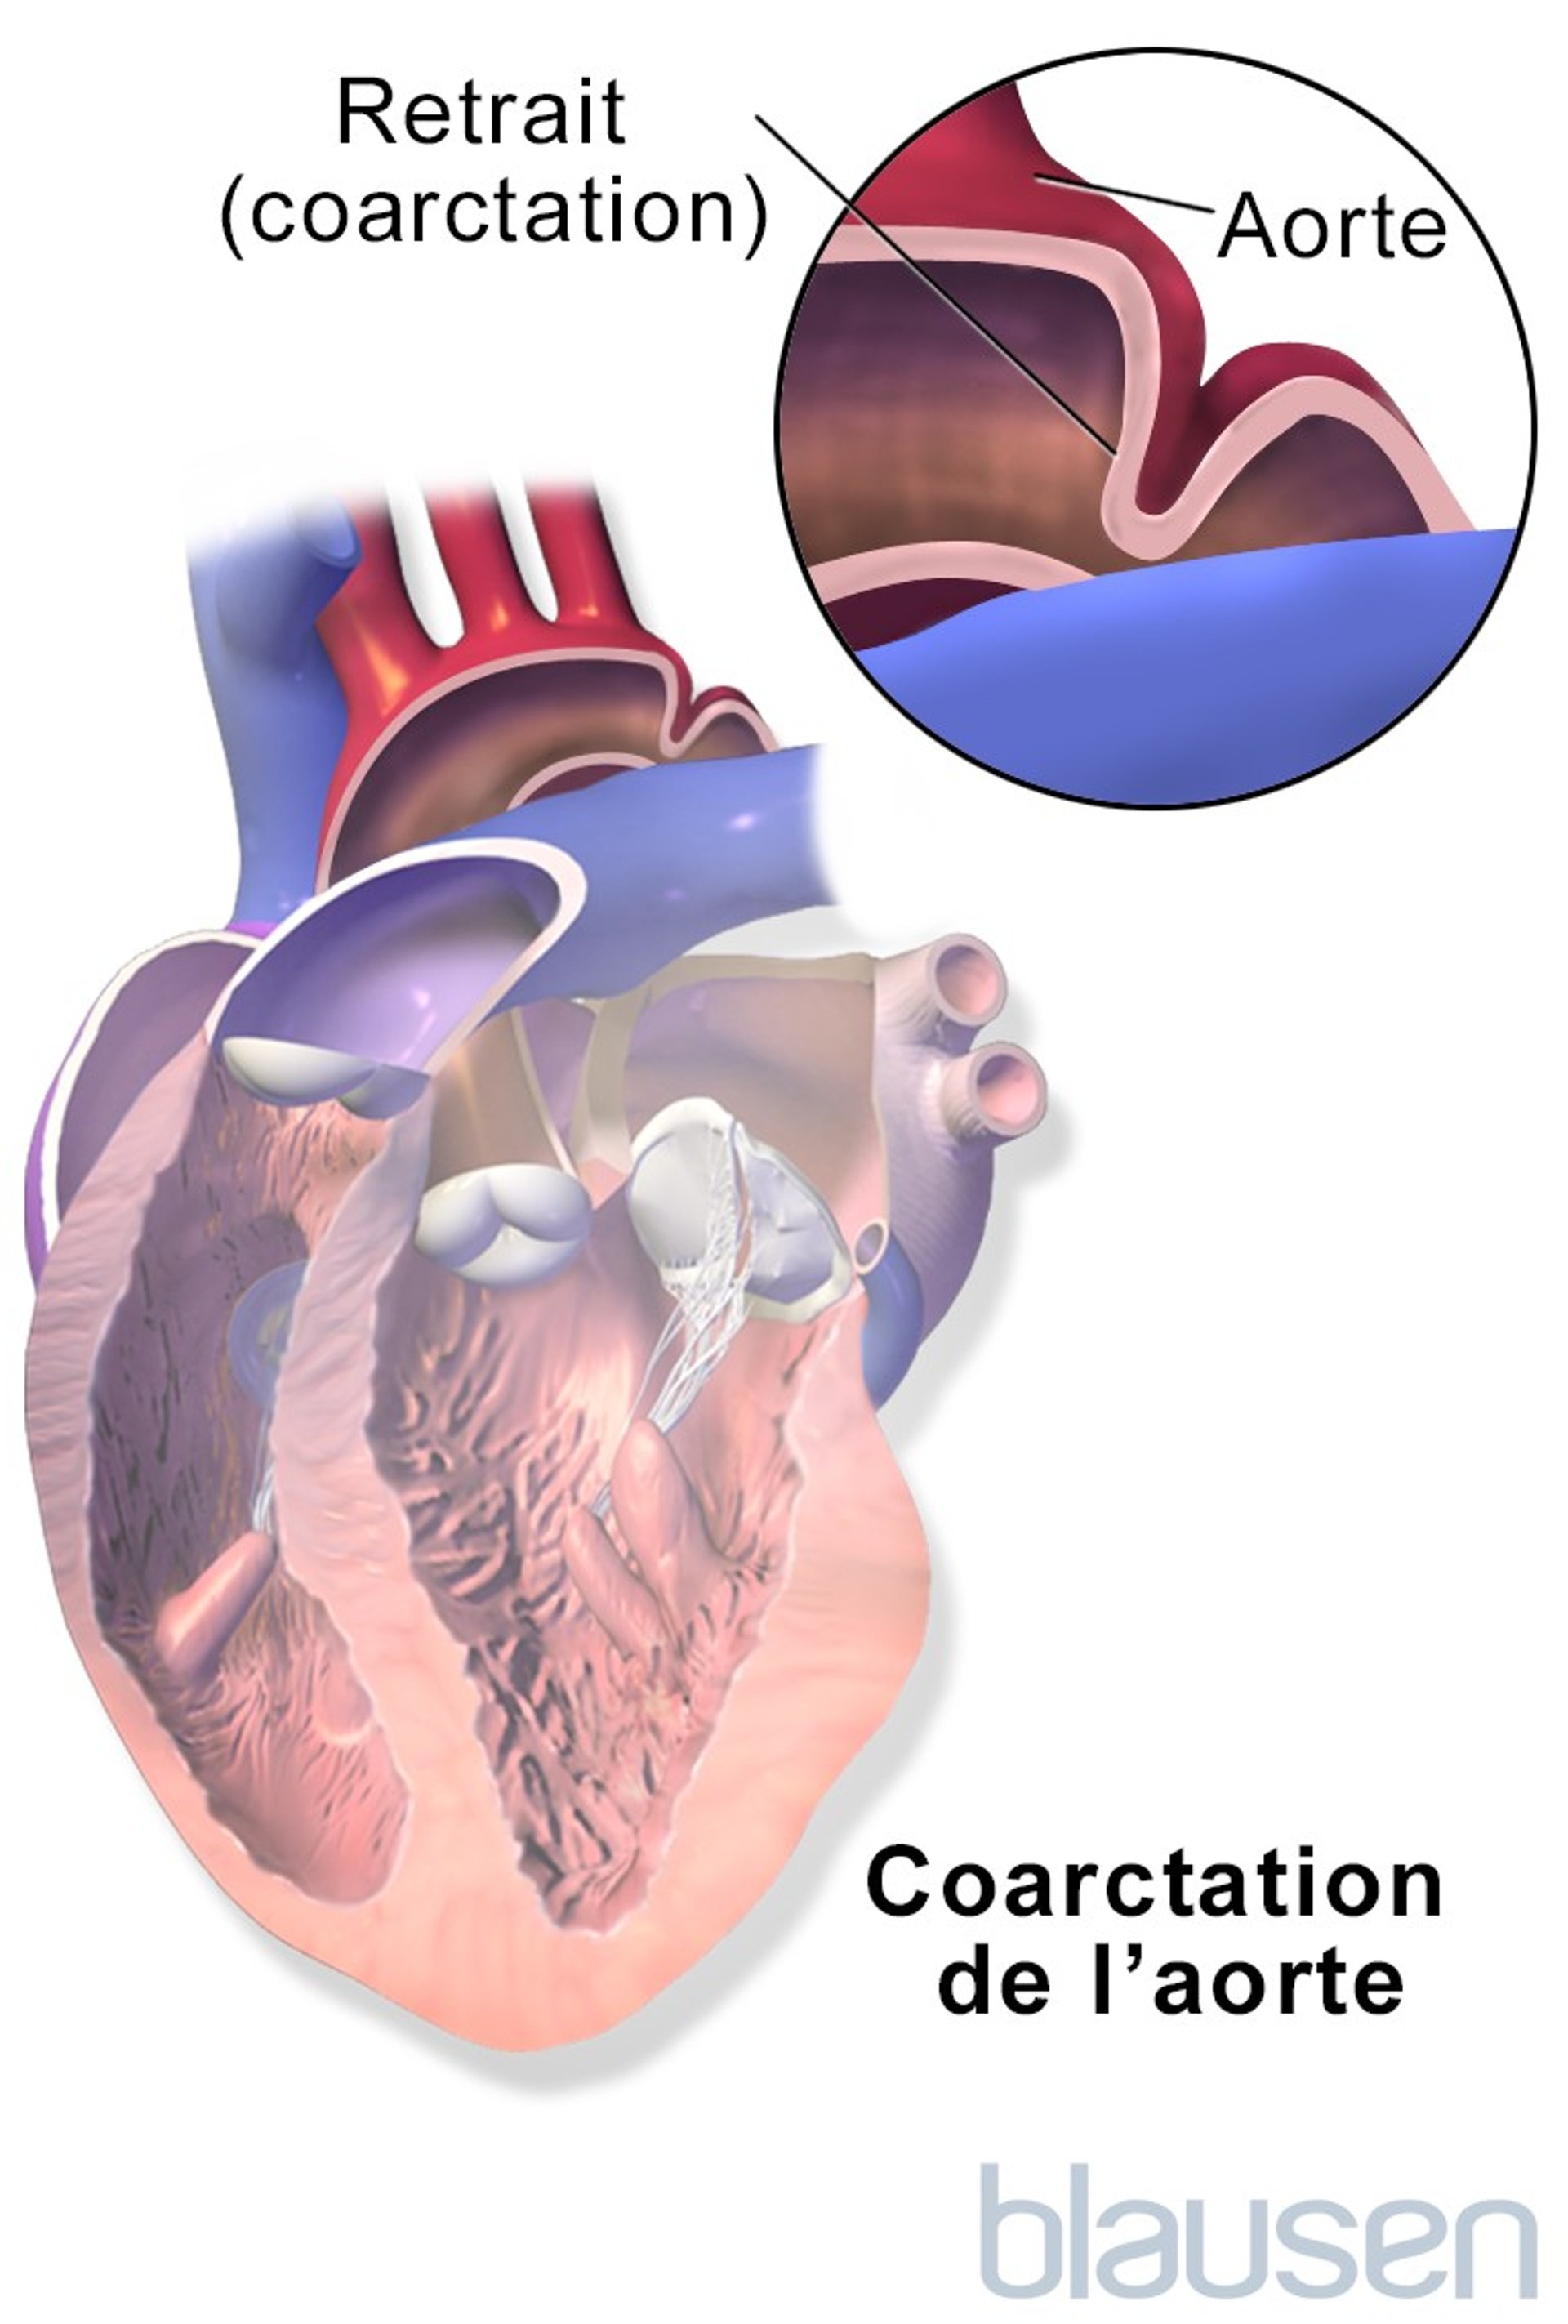 Coarctation de l’aorte